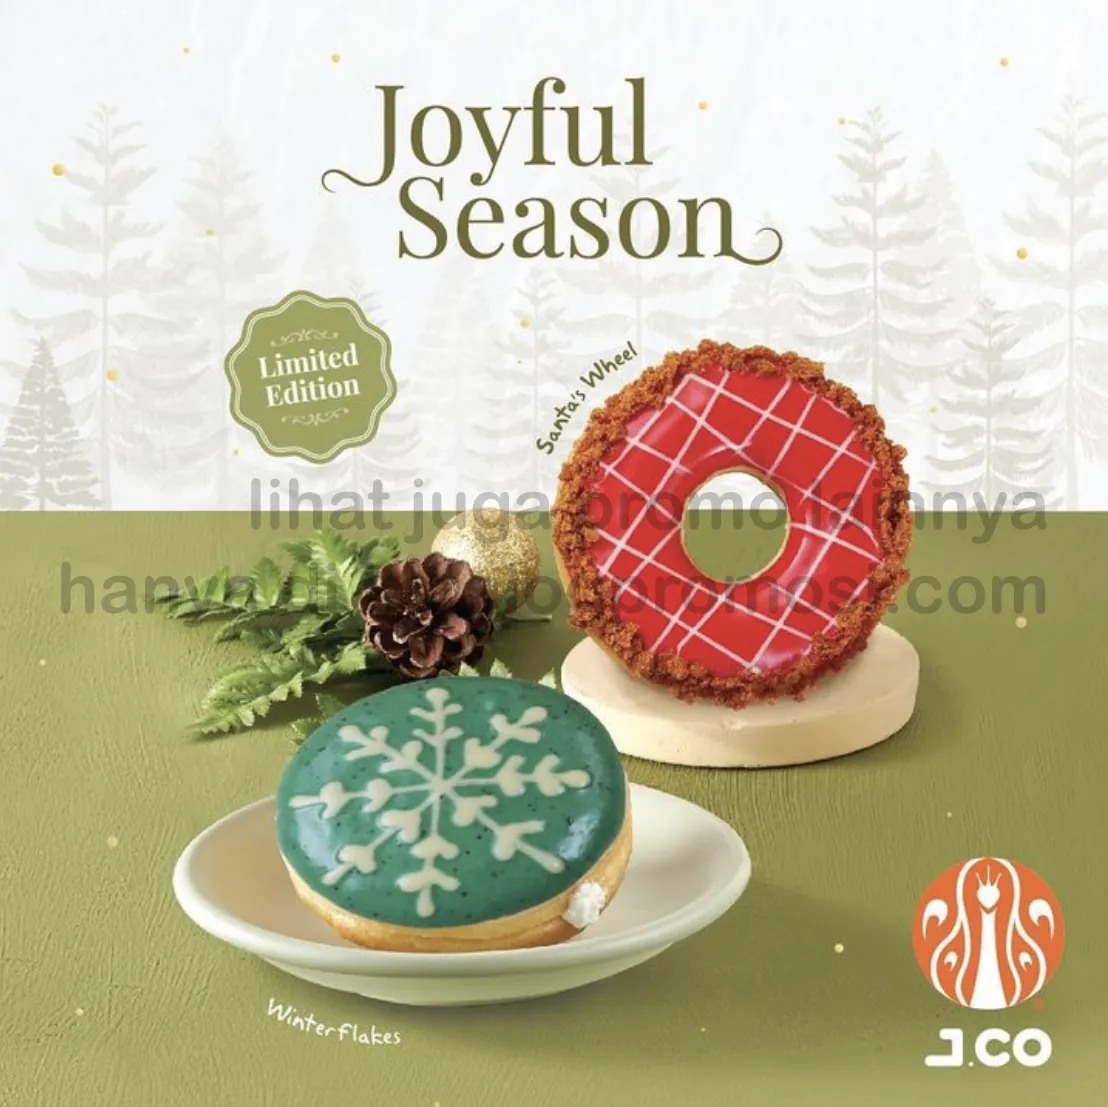 BARU! Linited Edition Santa's Wheel donut and Winterflakes Dontus dari JCO